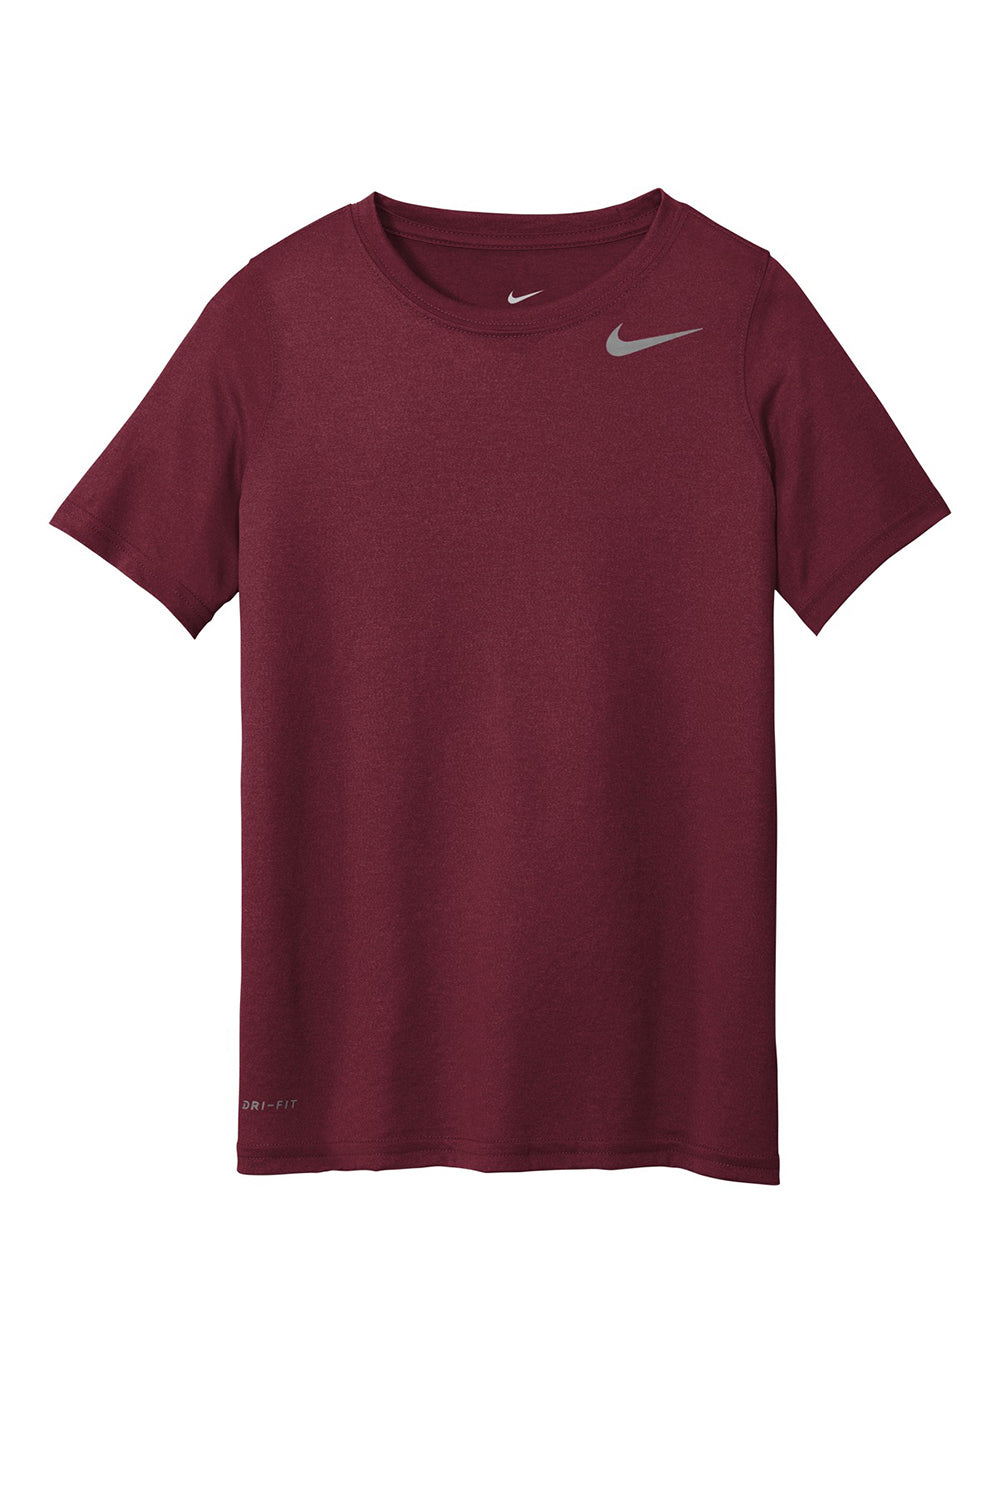 Nike 840178 Youth Legend Dri-Fit Moisture Wicking Short Sleeve Crewneck T-Shirt Deep Maroon Flat Front